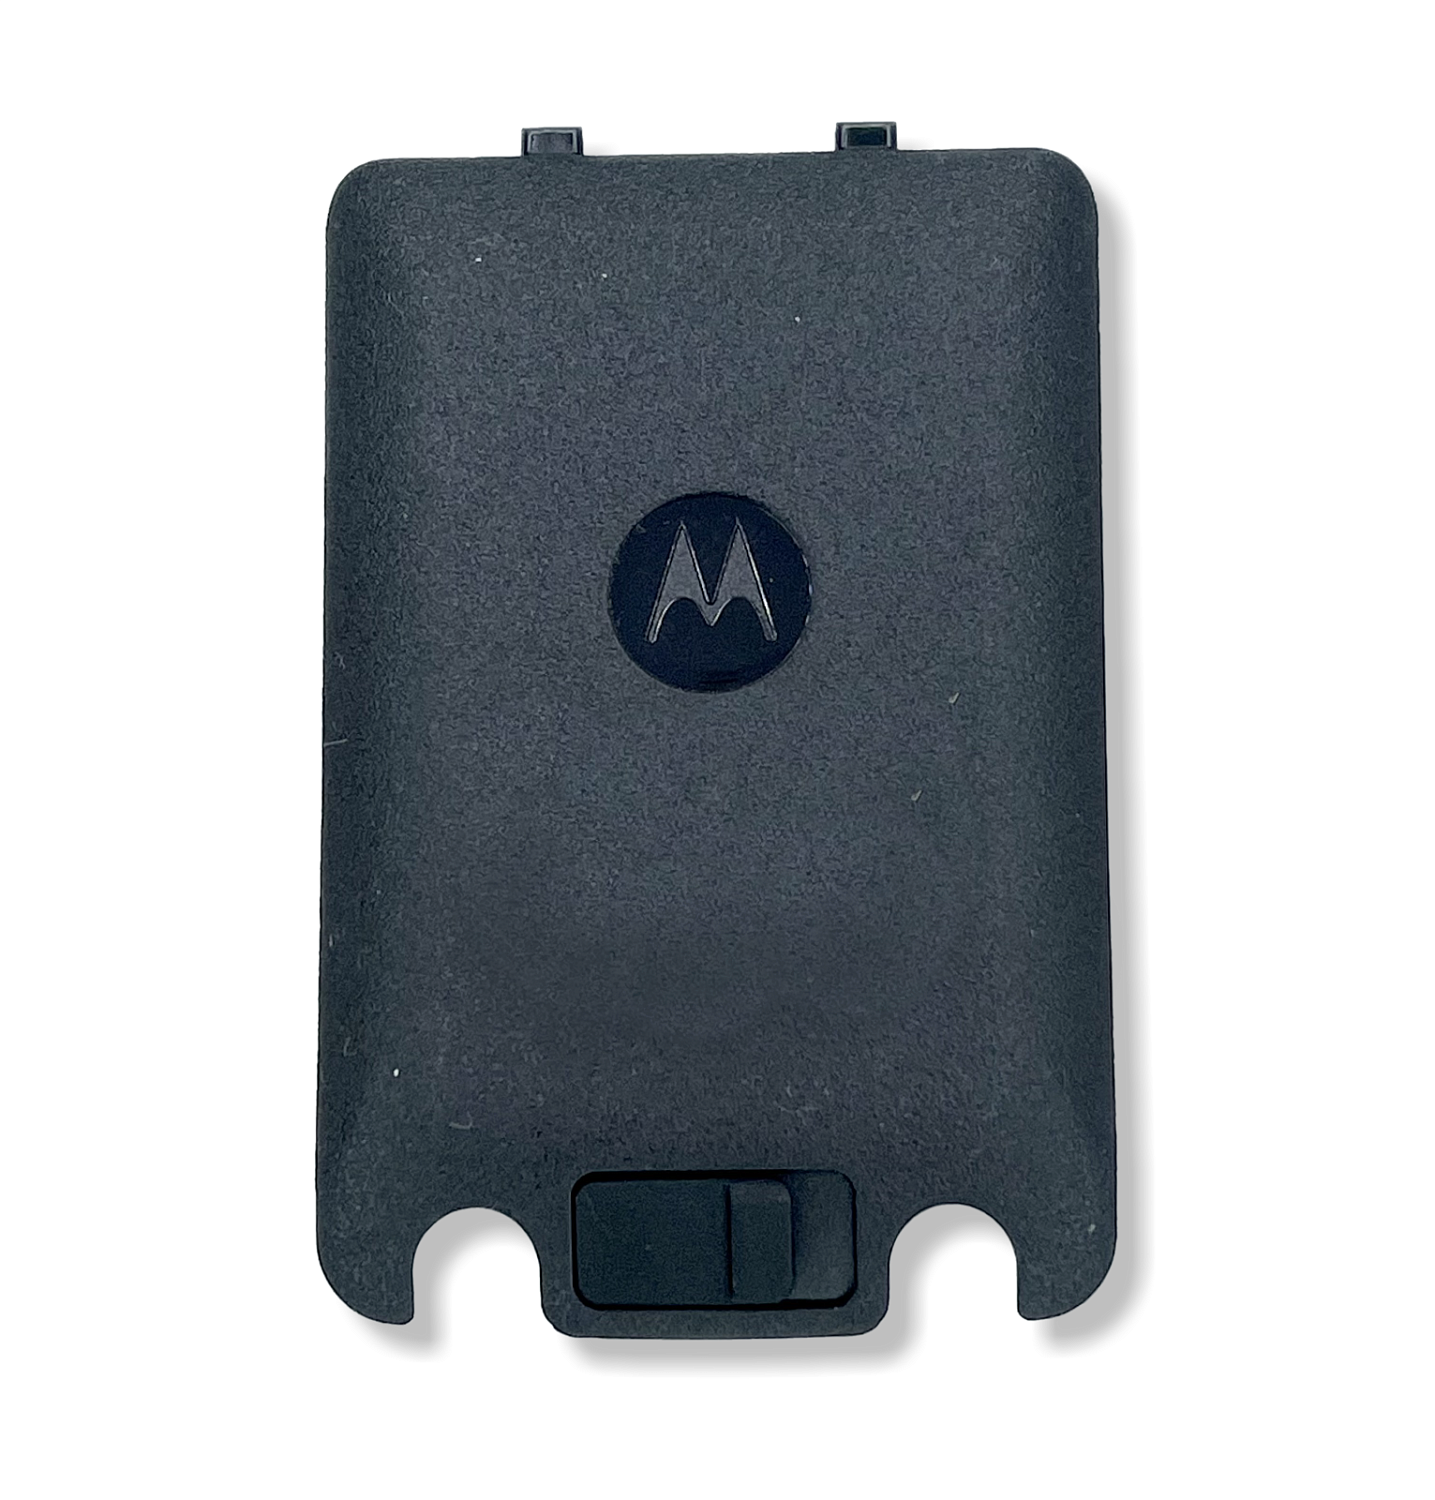 Motorola PMLN6000